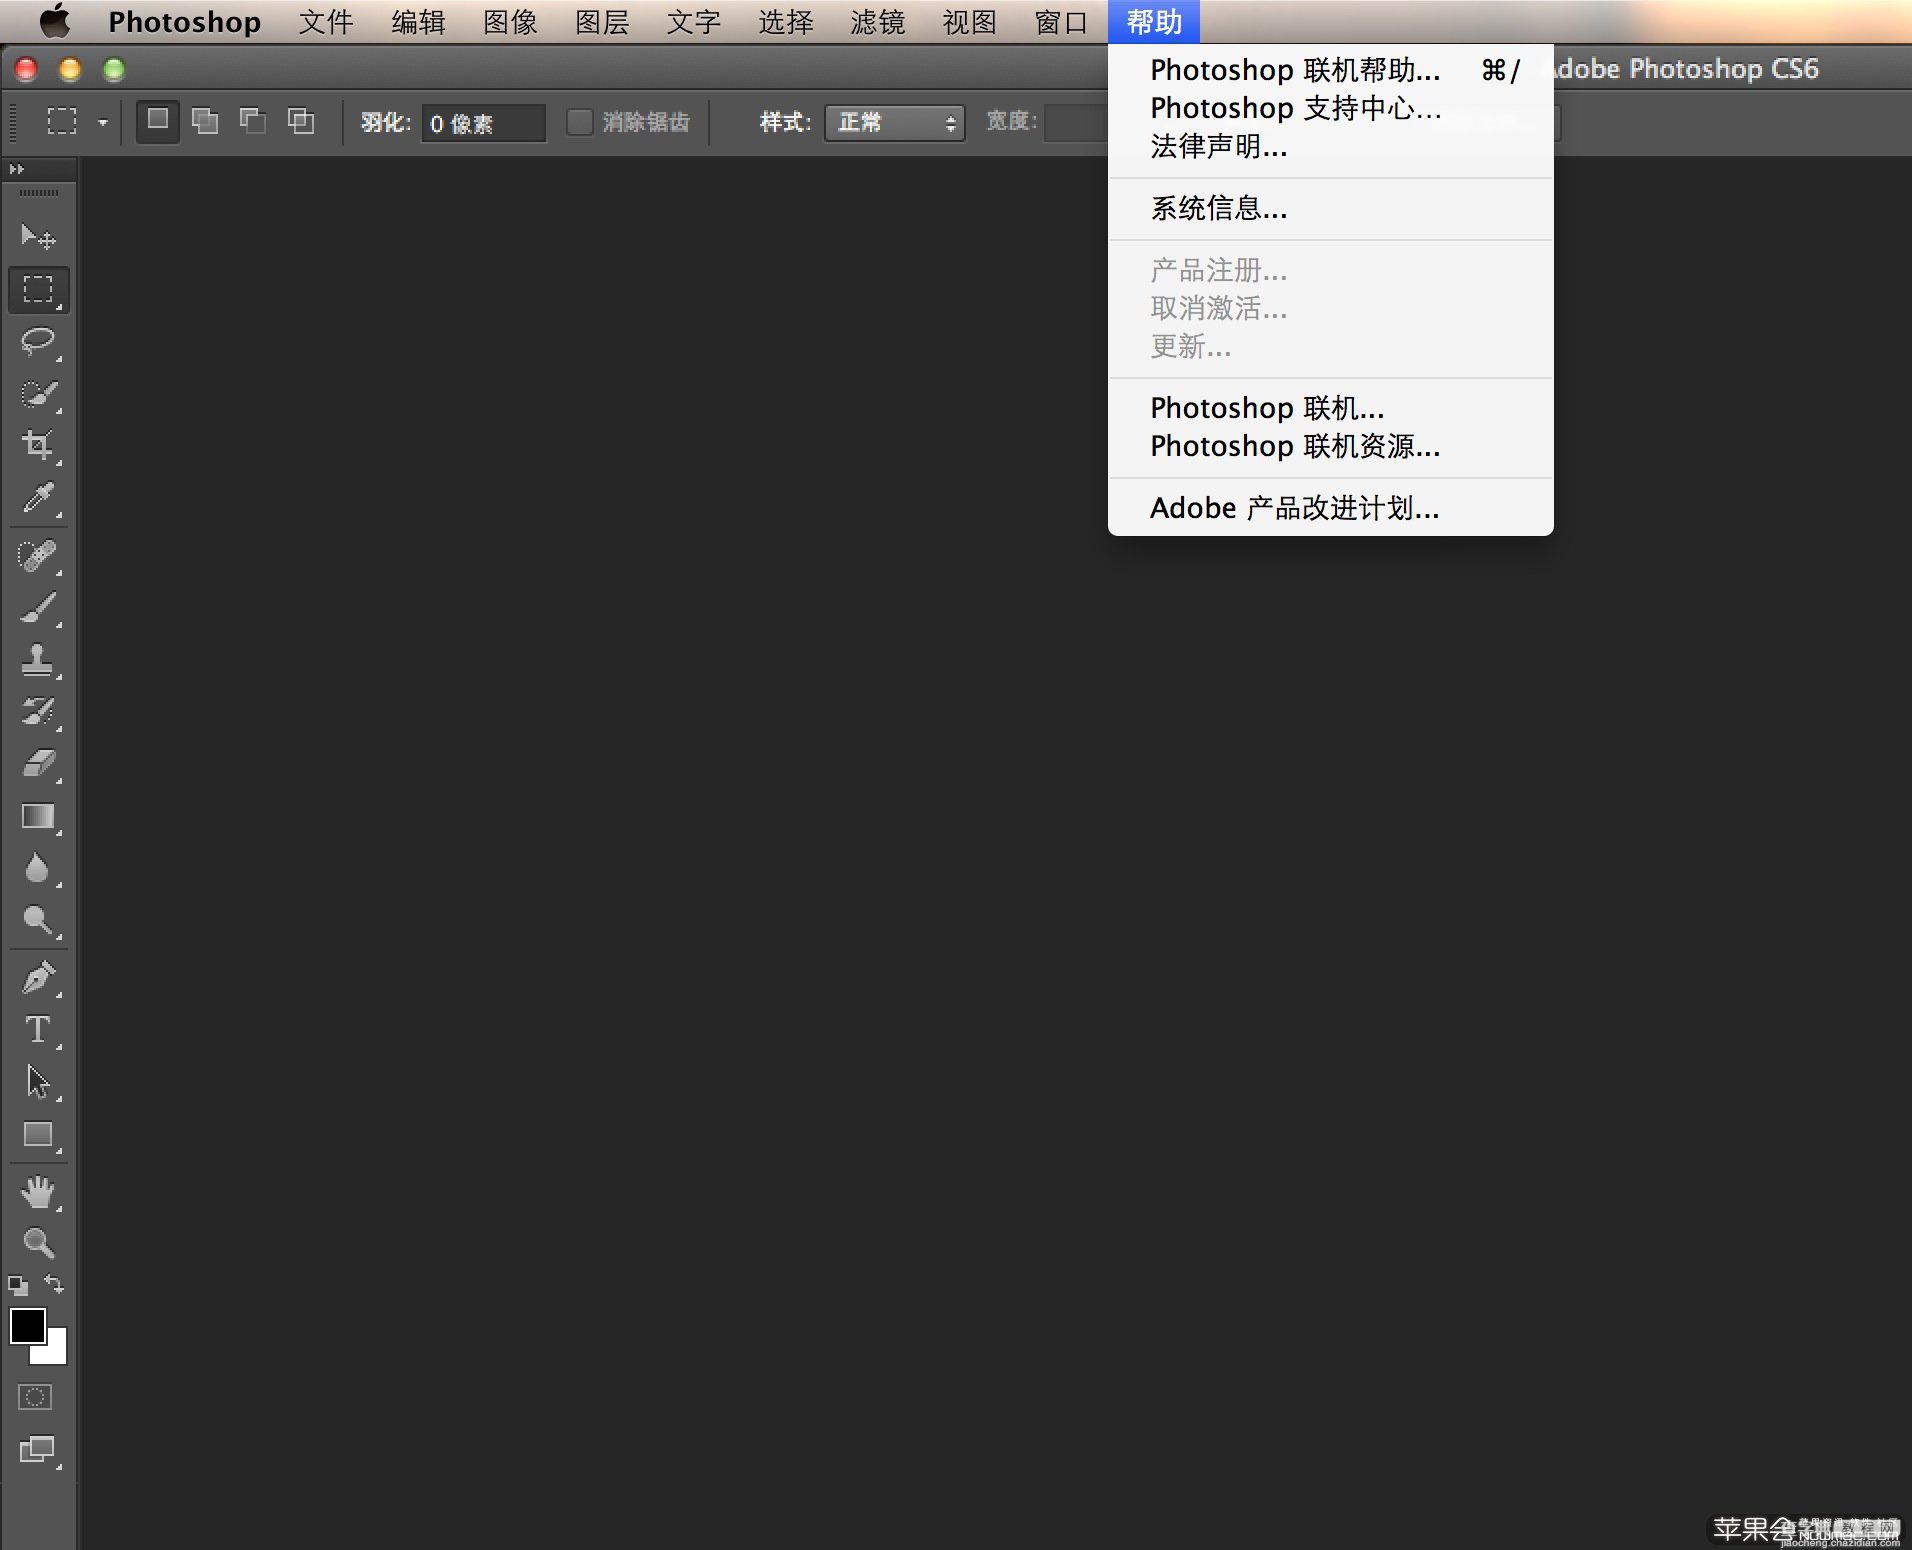 Adobe Photoshop CS6 for Mac的下载地址和详细安装破解步骤5